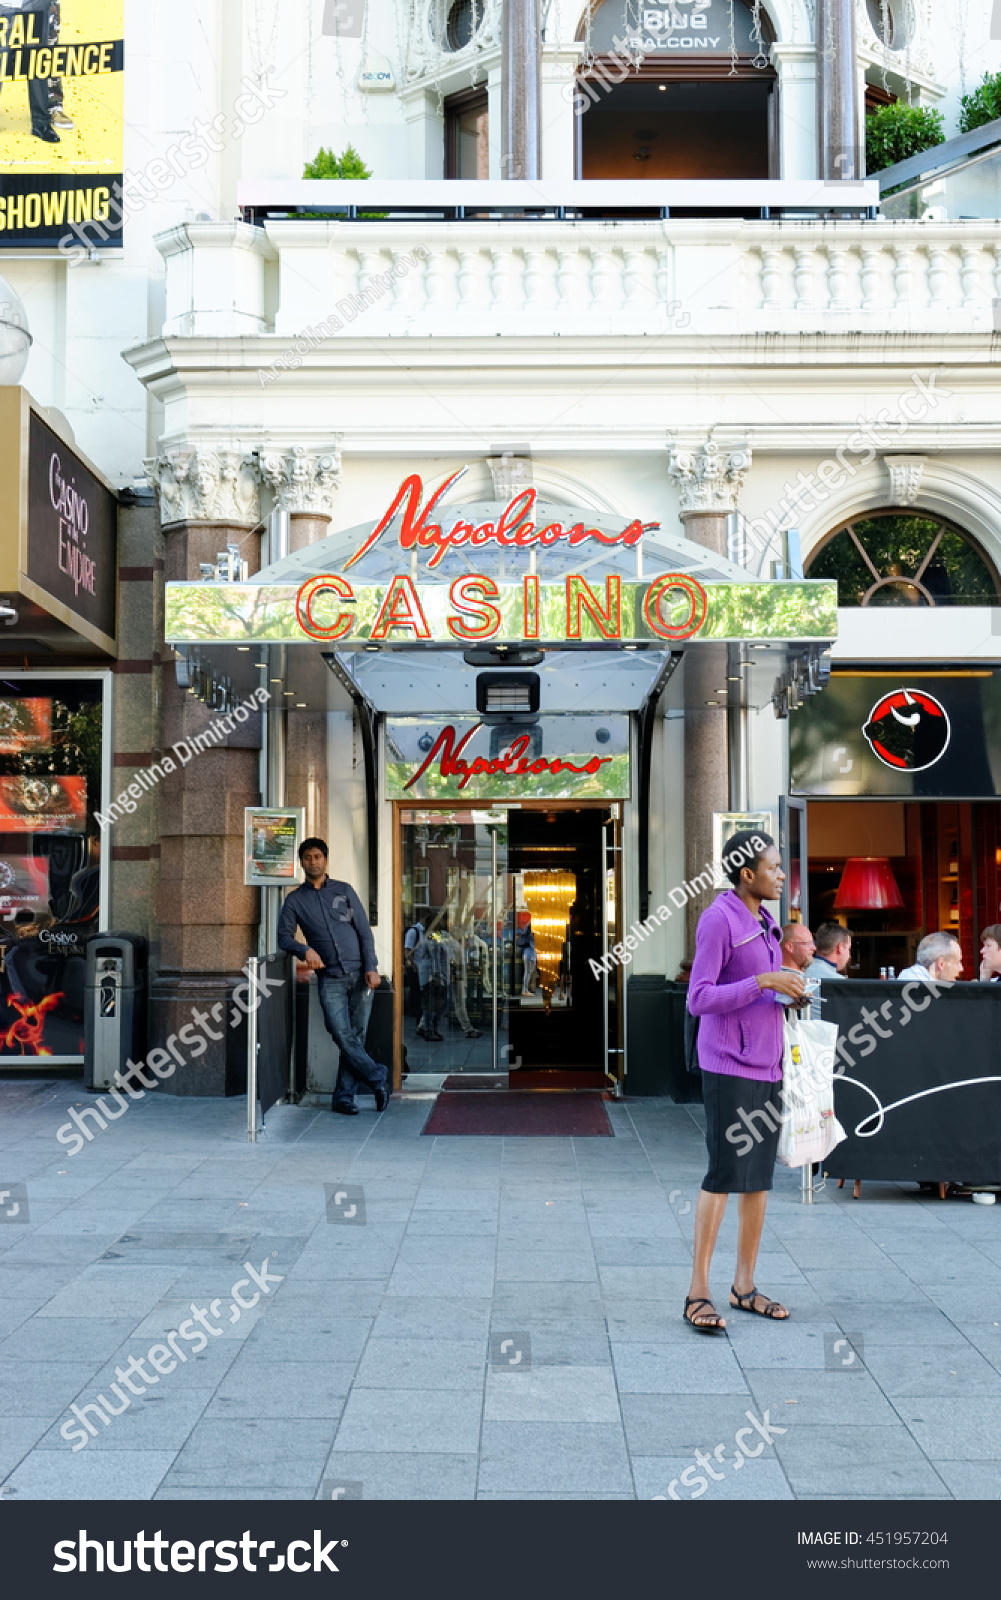 Napoleon casino restaurant london uk